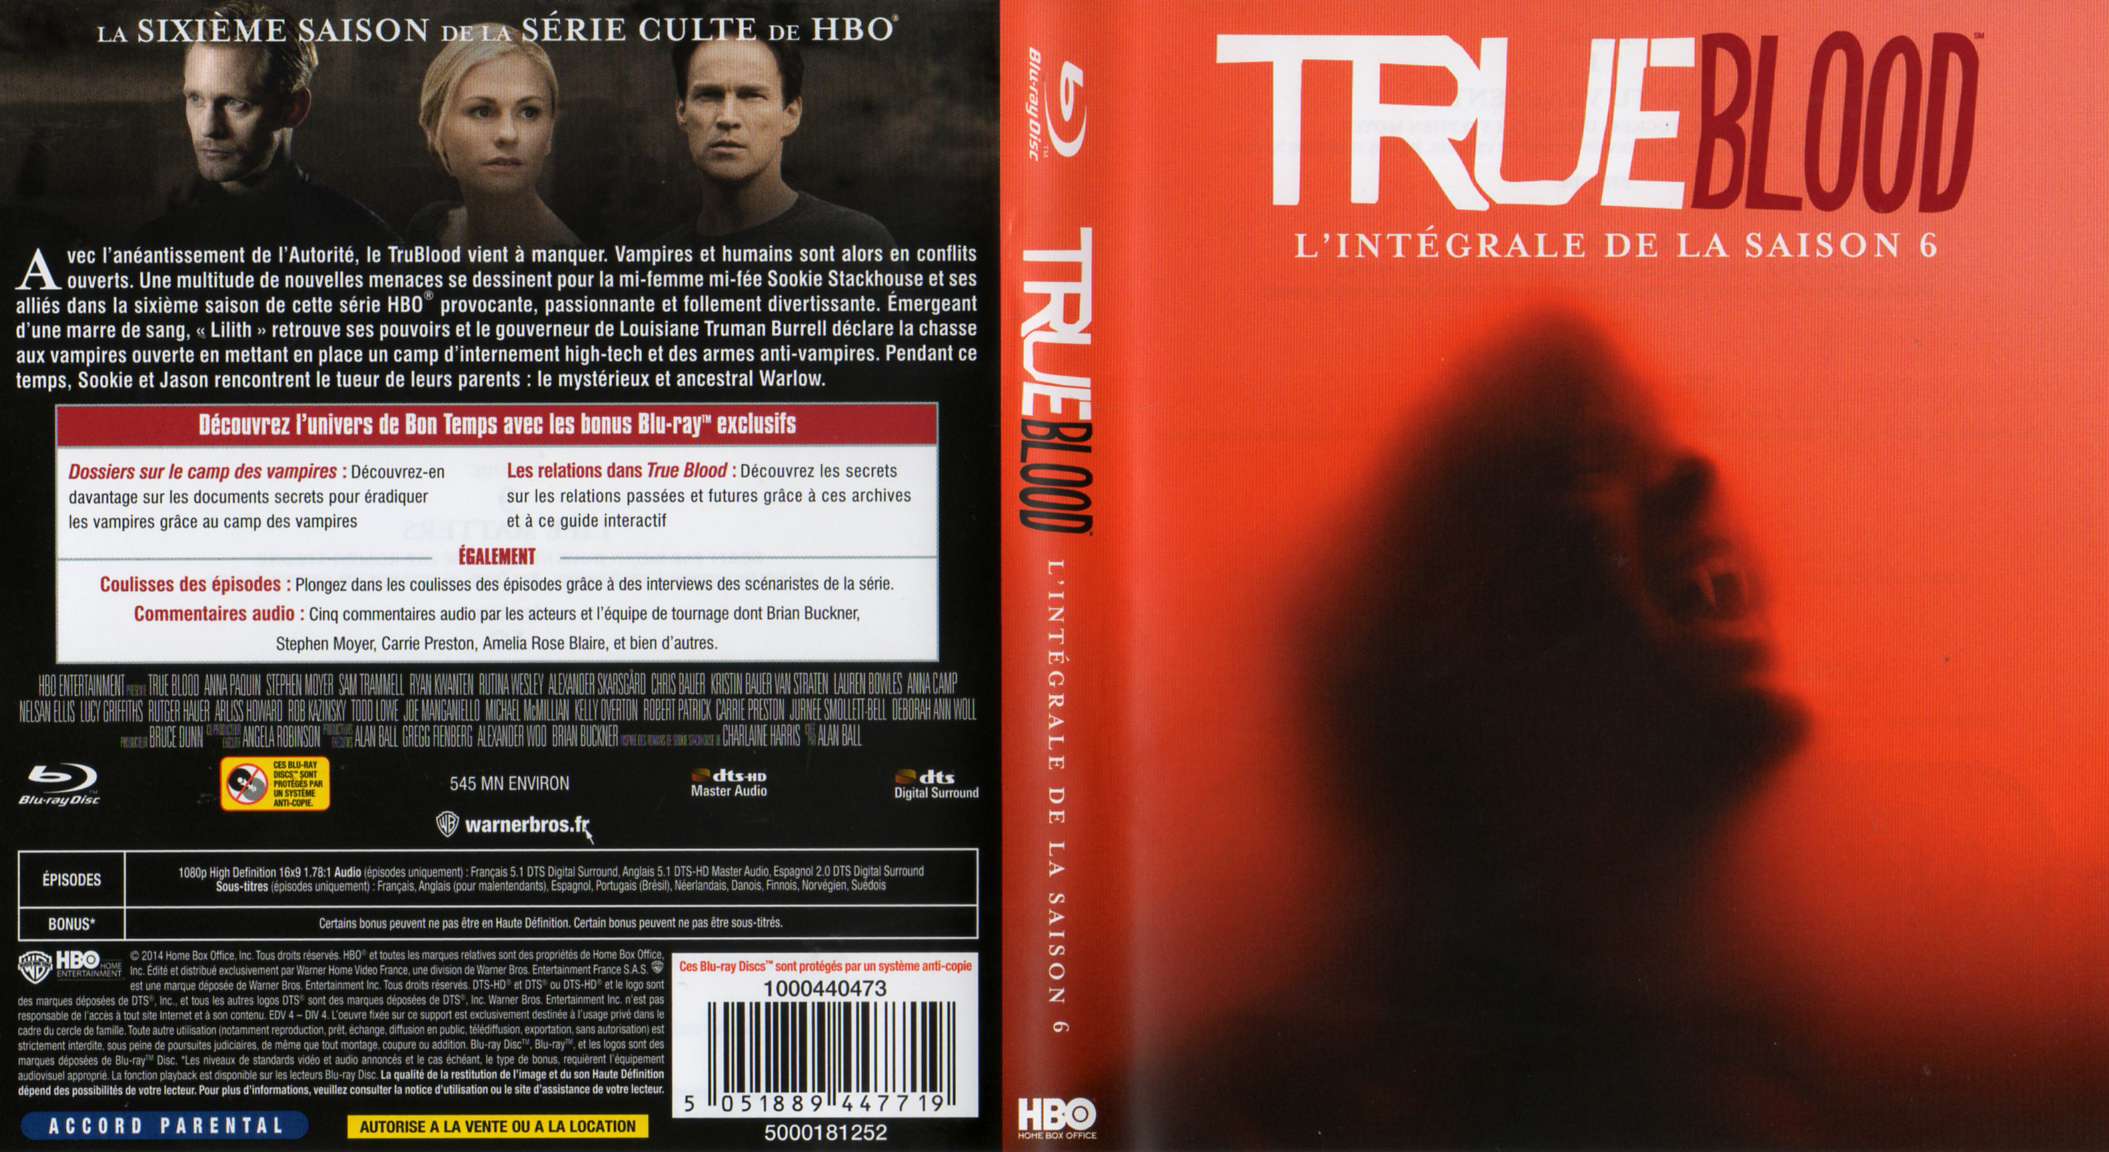 Jaquette DVD True blood saison 6 (BLU-RAY)